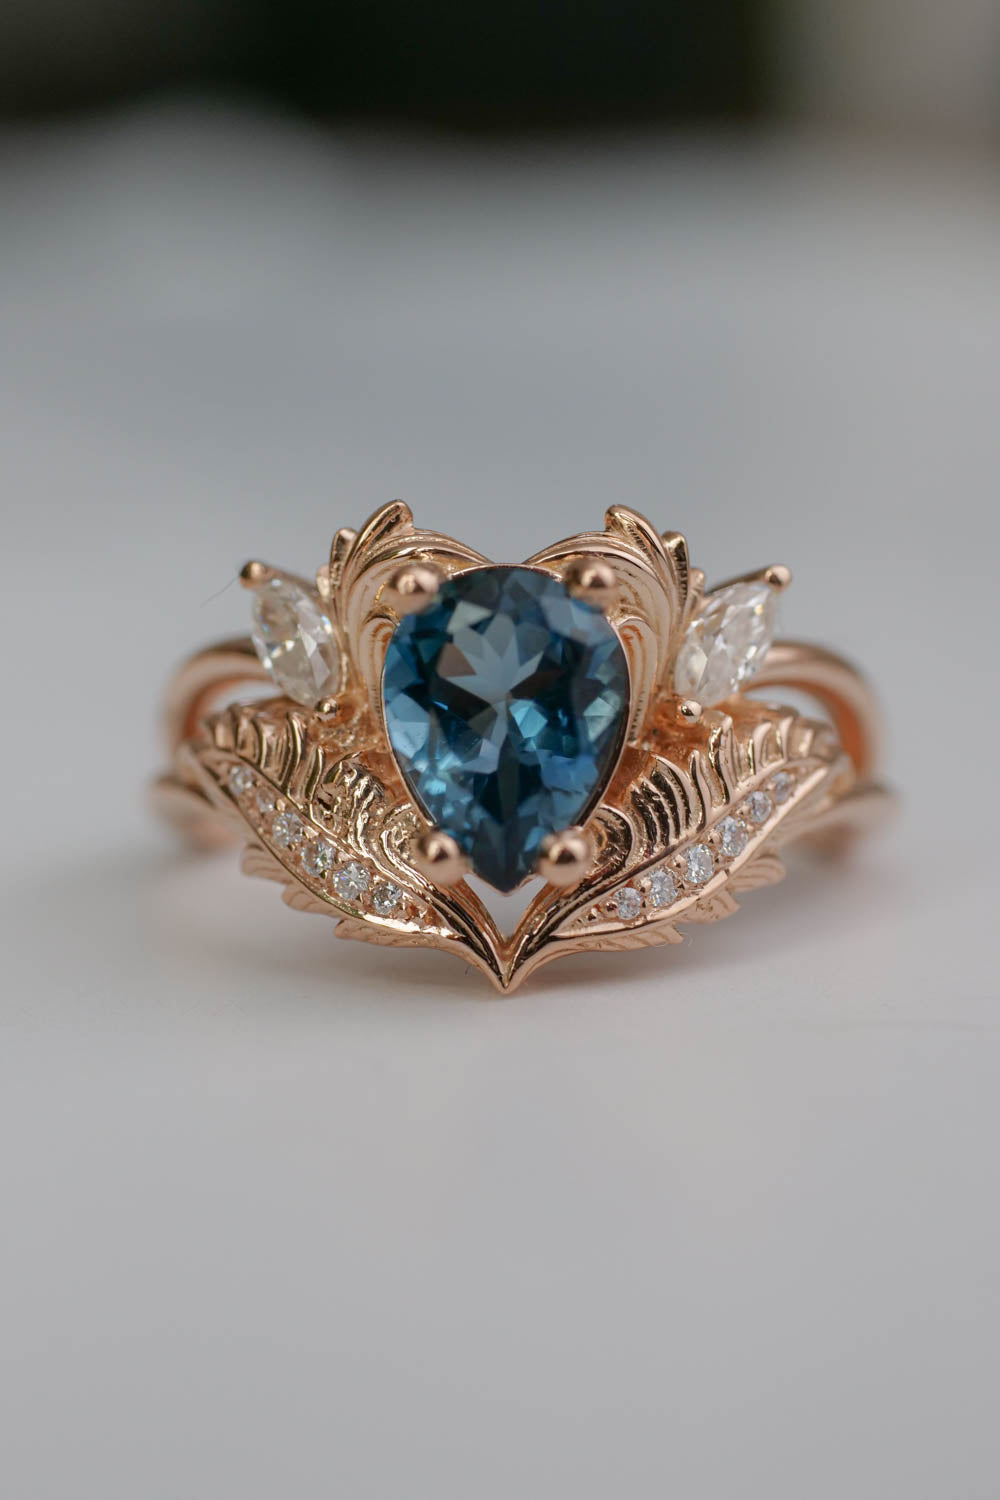 Blue Topaz Gemstone Ring Image - 3015 – JEWELLERY GRAPHICS